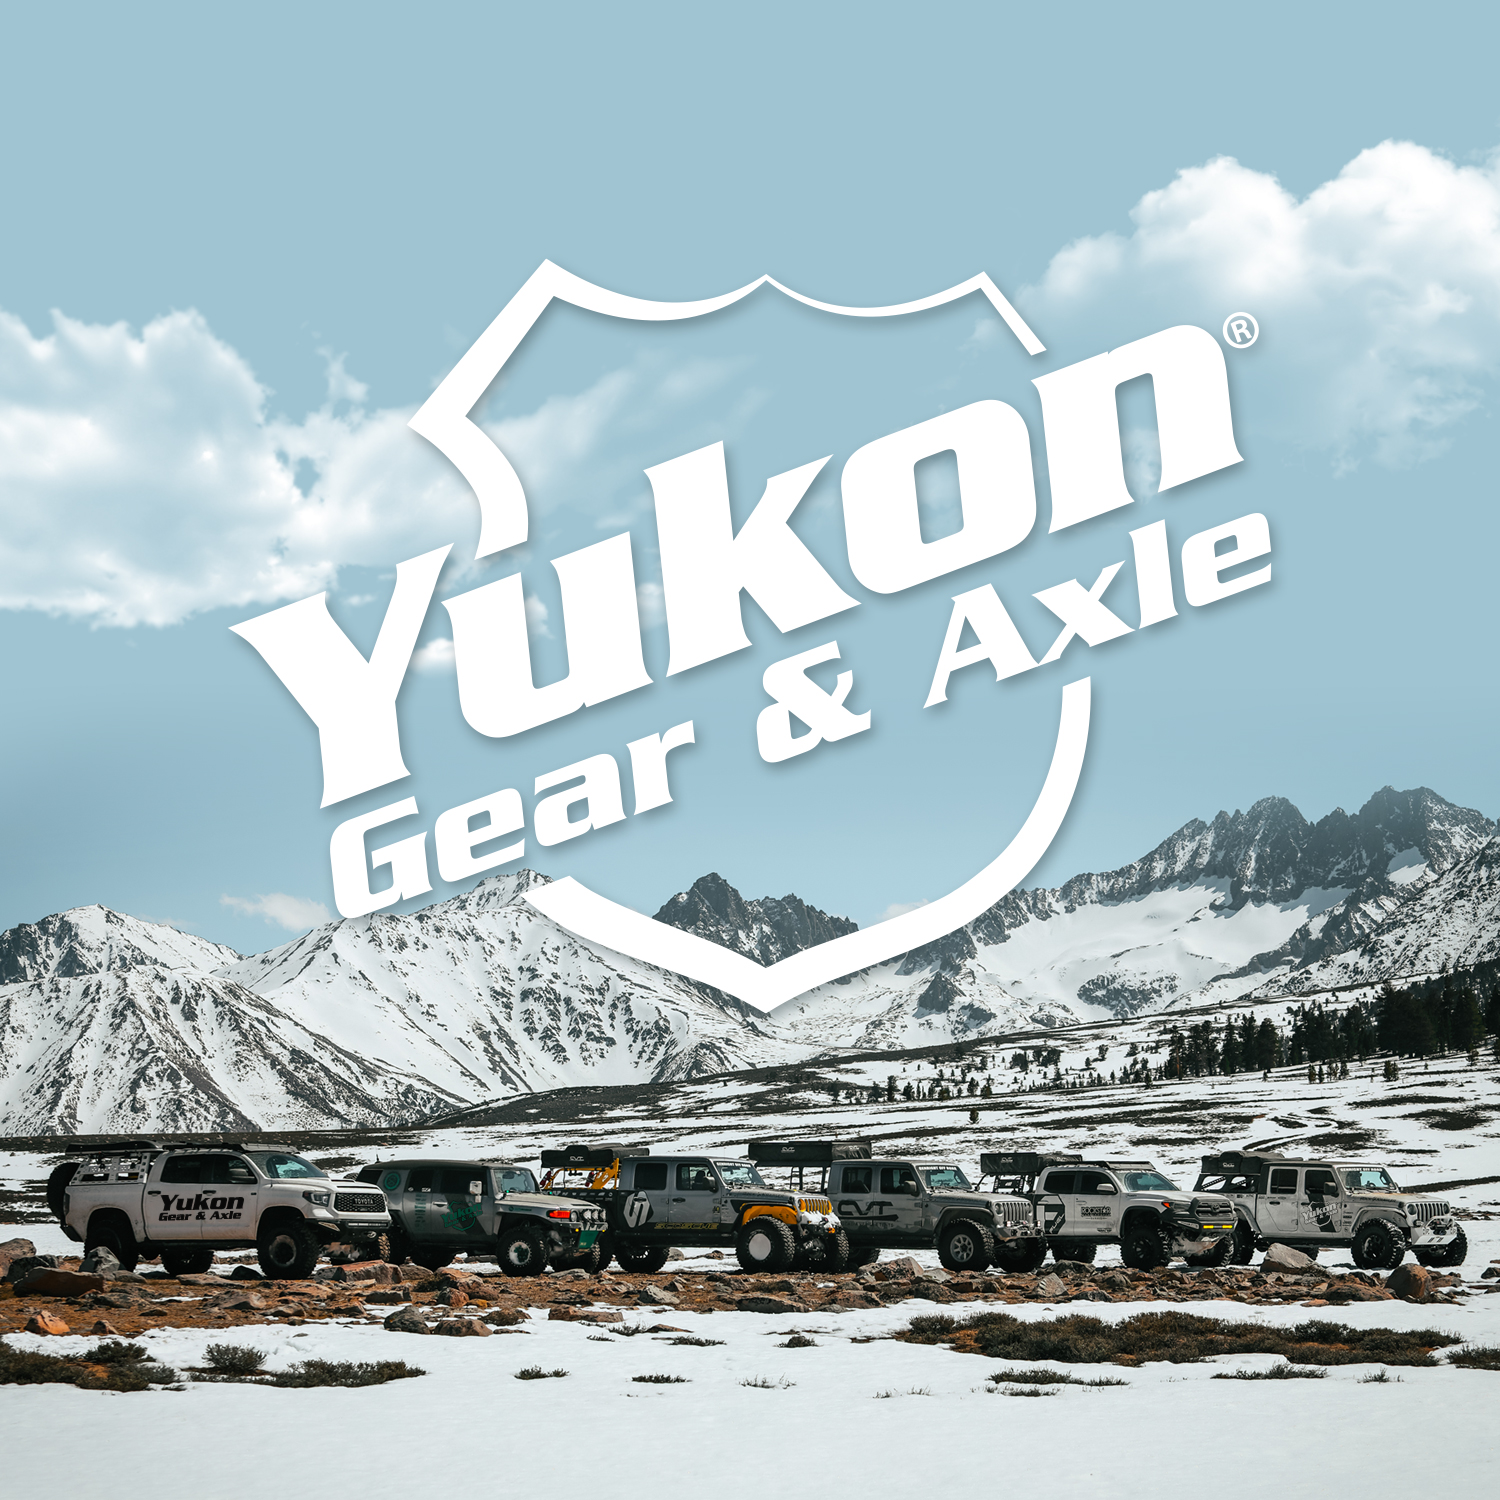 Yukon standard open spider gear kit, 33 spline GM 9.25" IFS and GM 9.5" axles 